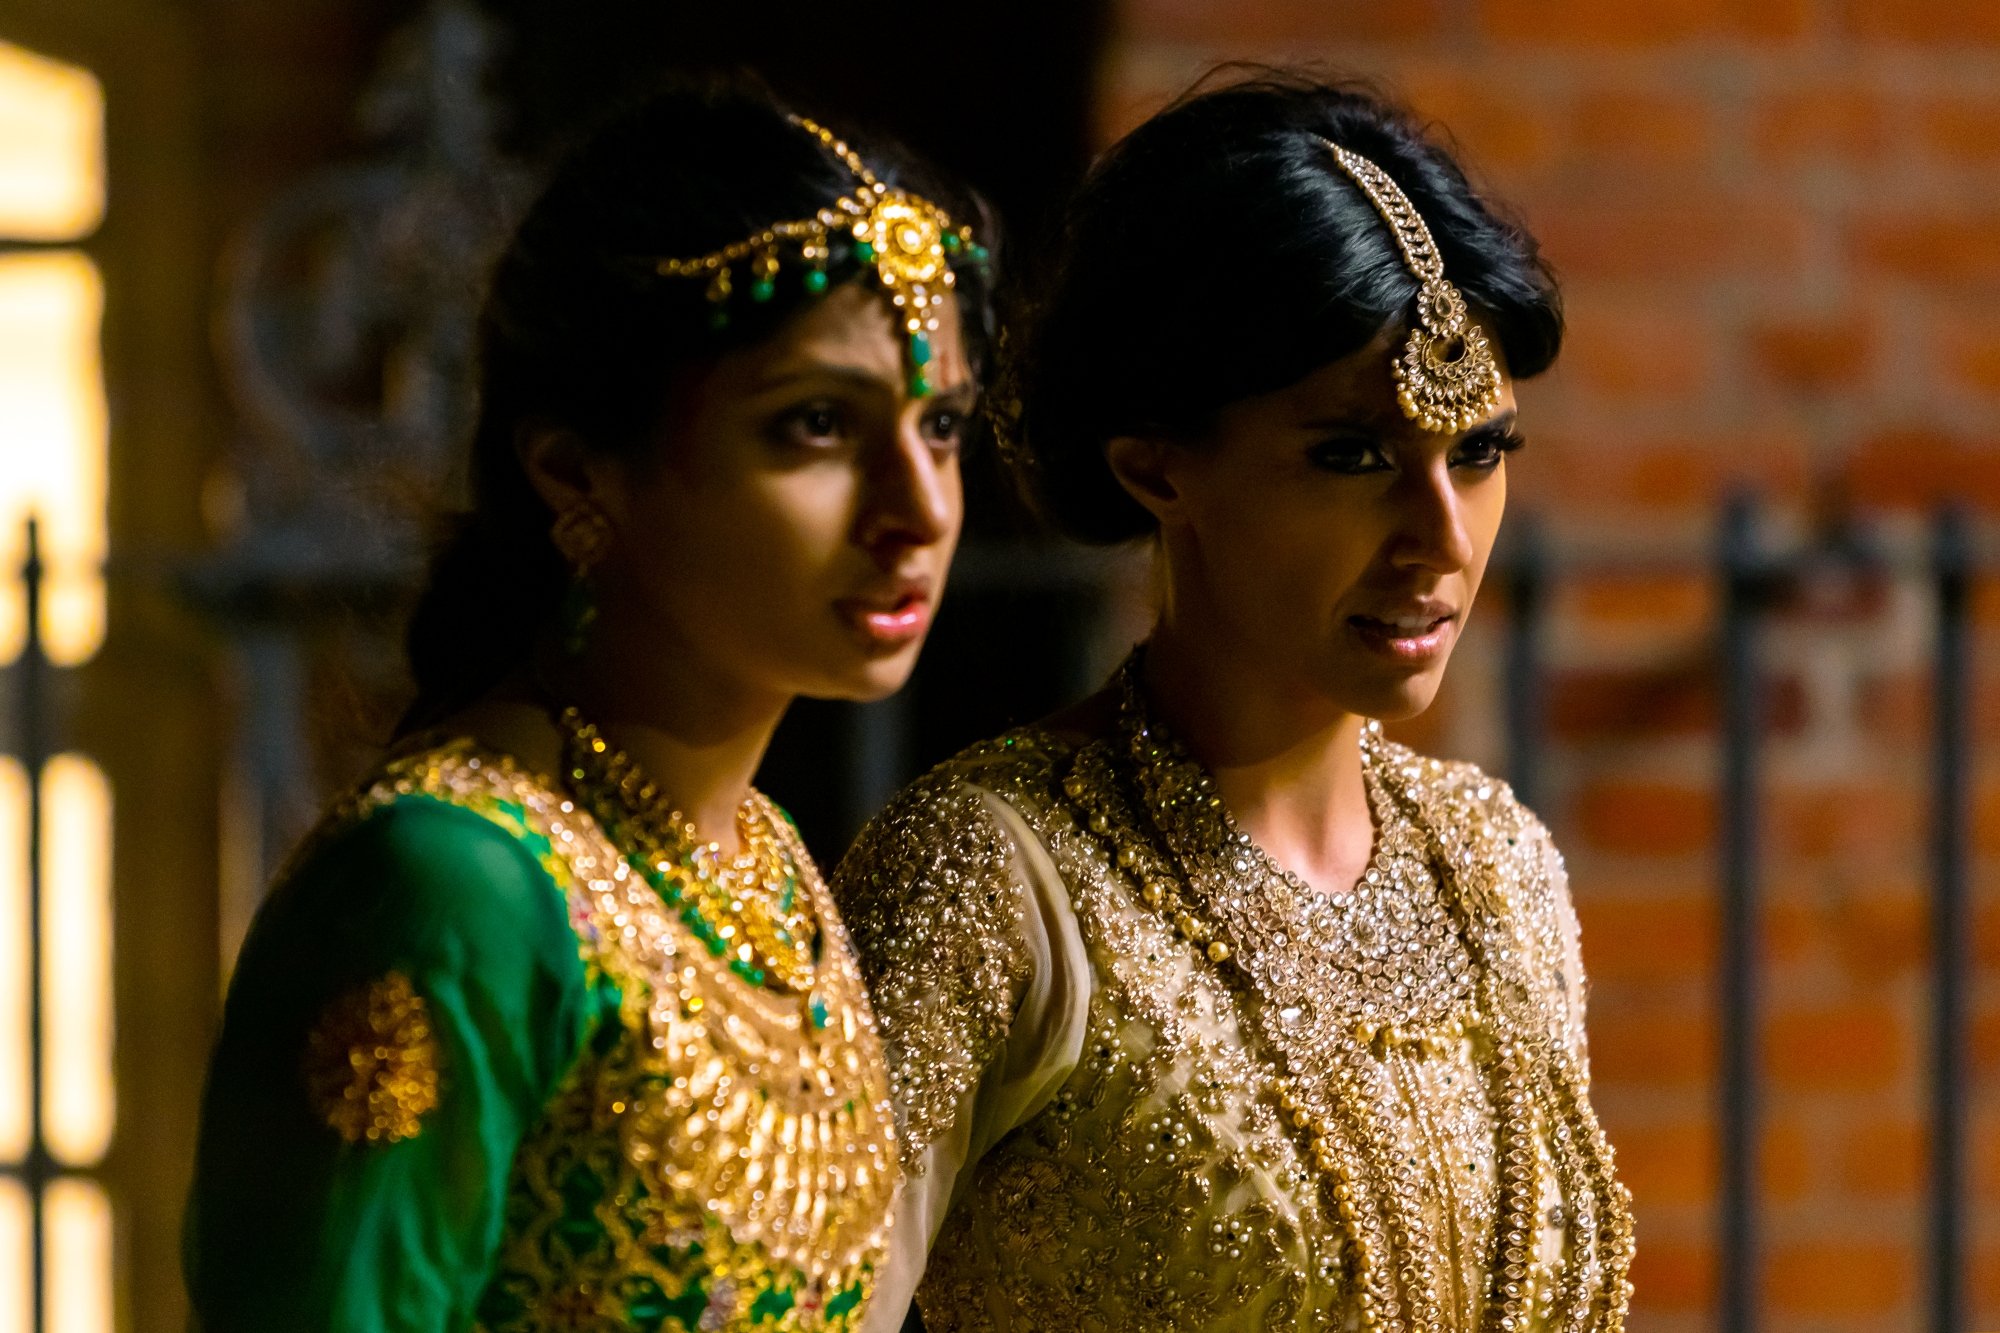 'Polite Society' Priya Kansara as Ria Khan and Ritu Arya as Lena looking shocked. Ria wearing a green and gold dress. Lena wearing a white and gold dress.